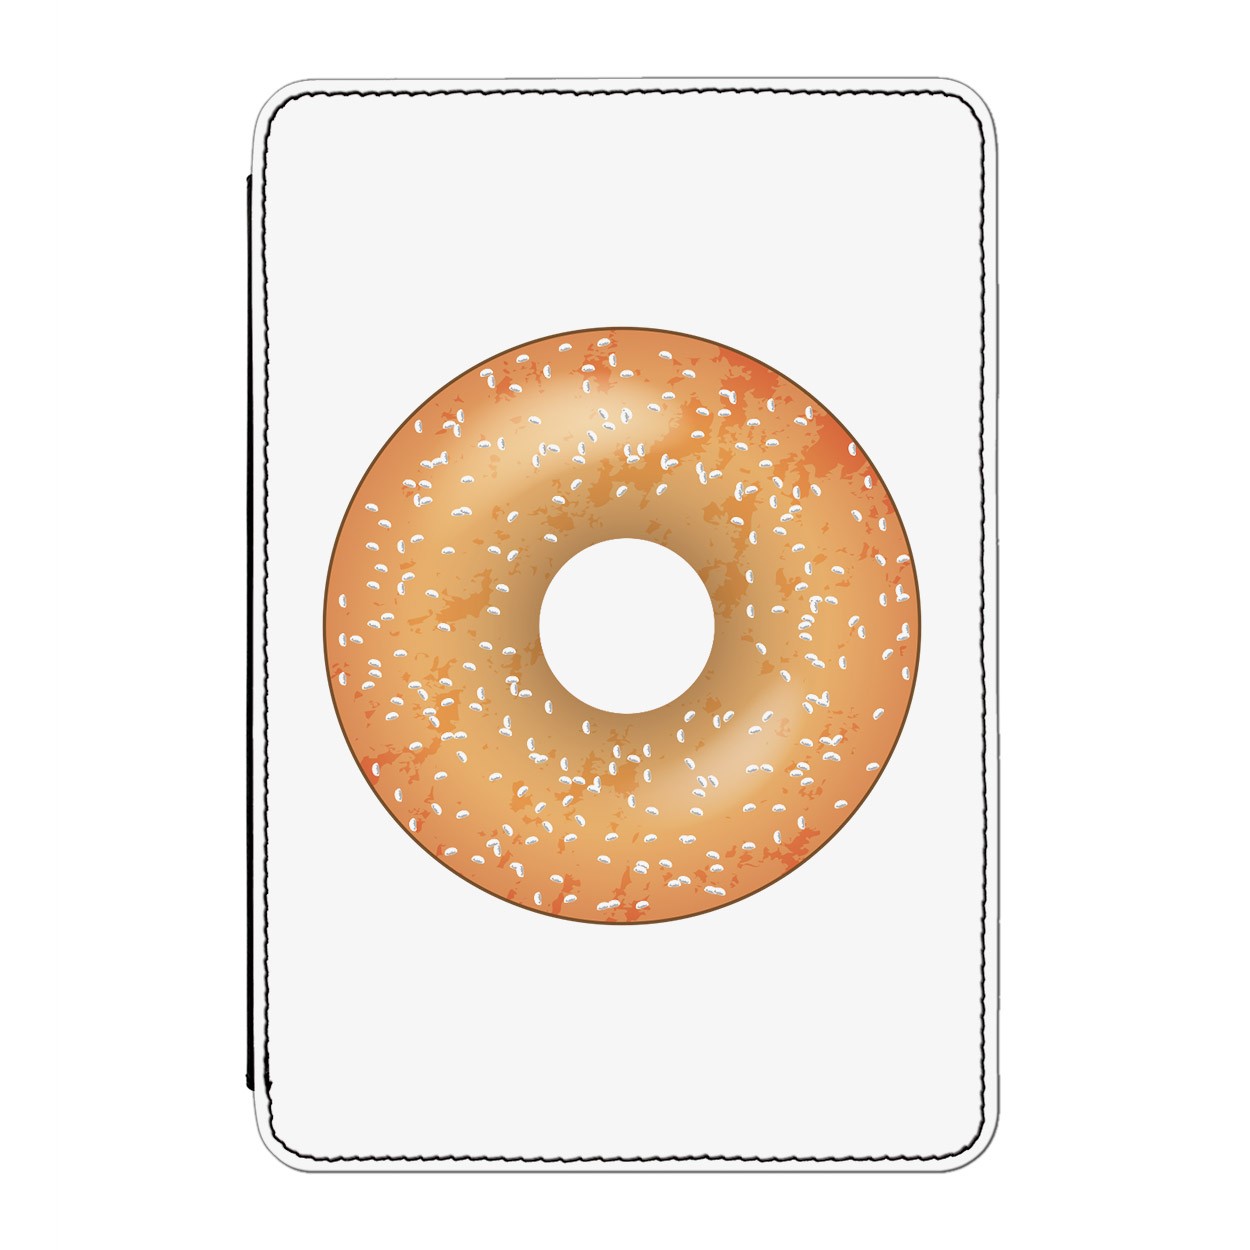 Sprinkled Glazed Doughnut Donut Case Cover for iPad Mini 4